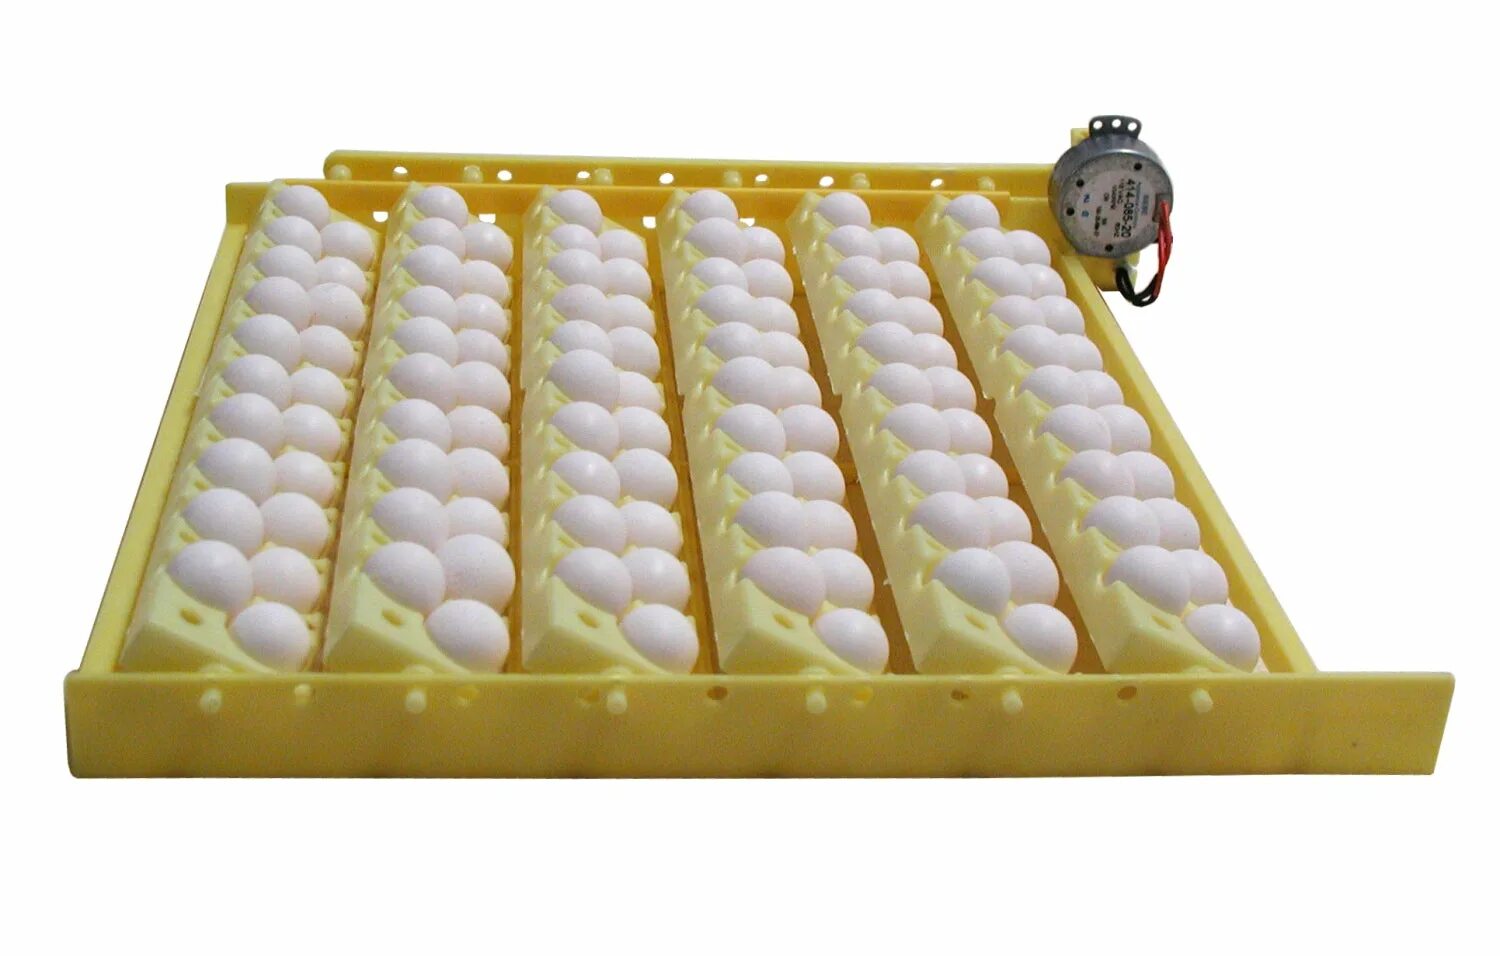 Автоматический переворот яиц в инкубаторе. Инкубатор Egg incubator. Инкубатор Hova Bator. Инкубатор FLORAFLEX incubator Kit. Инкубатор "WQ-24".